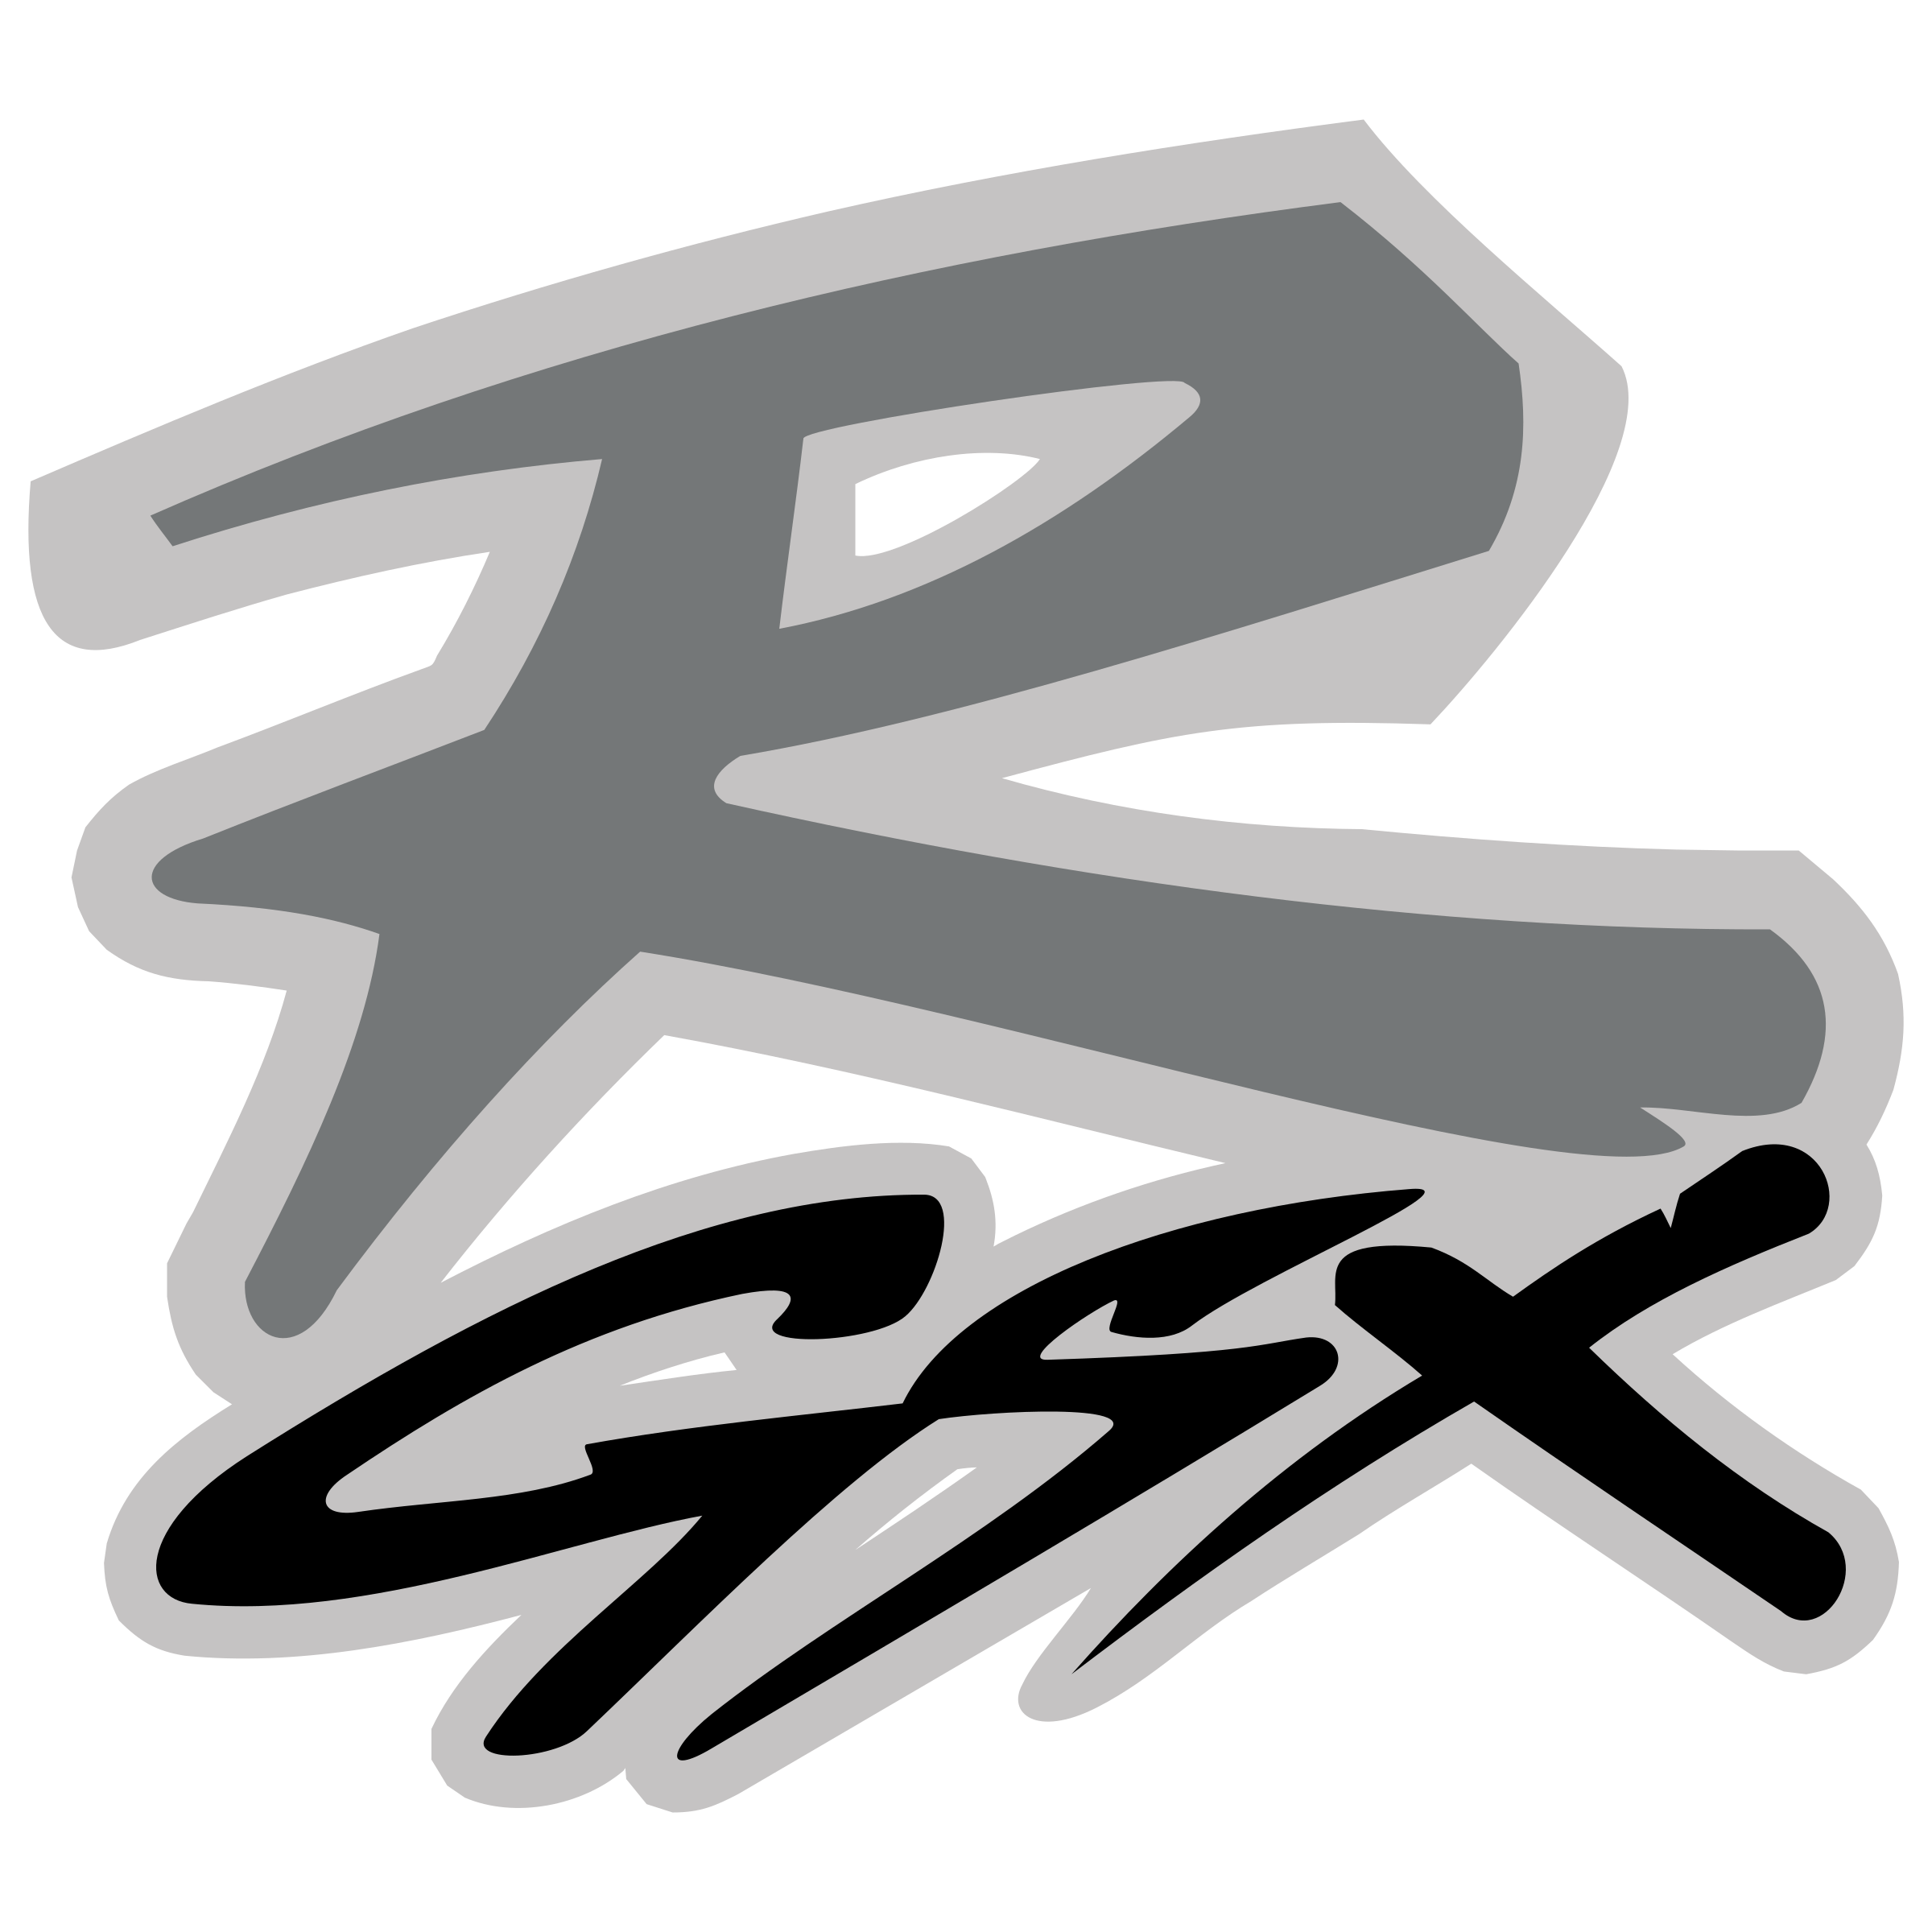 GSX Logo - GSX R Logo PNG Transparent & SVG Vector - Freebie Supply